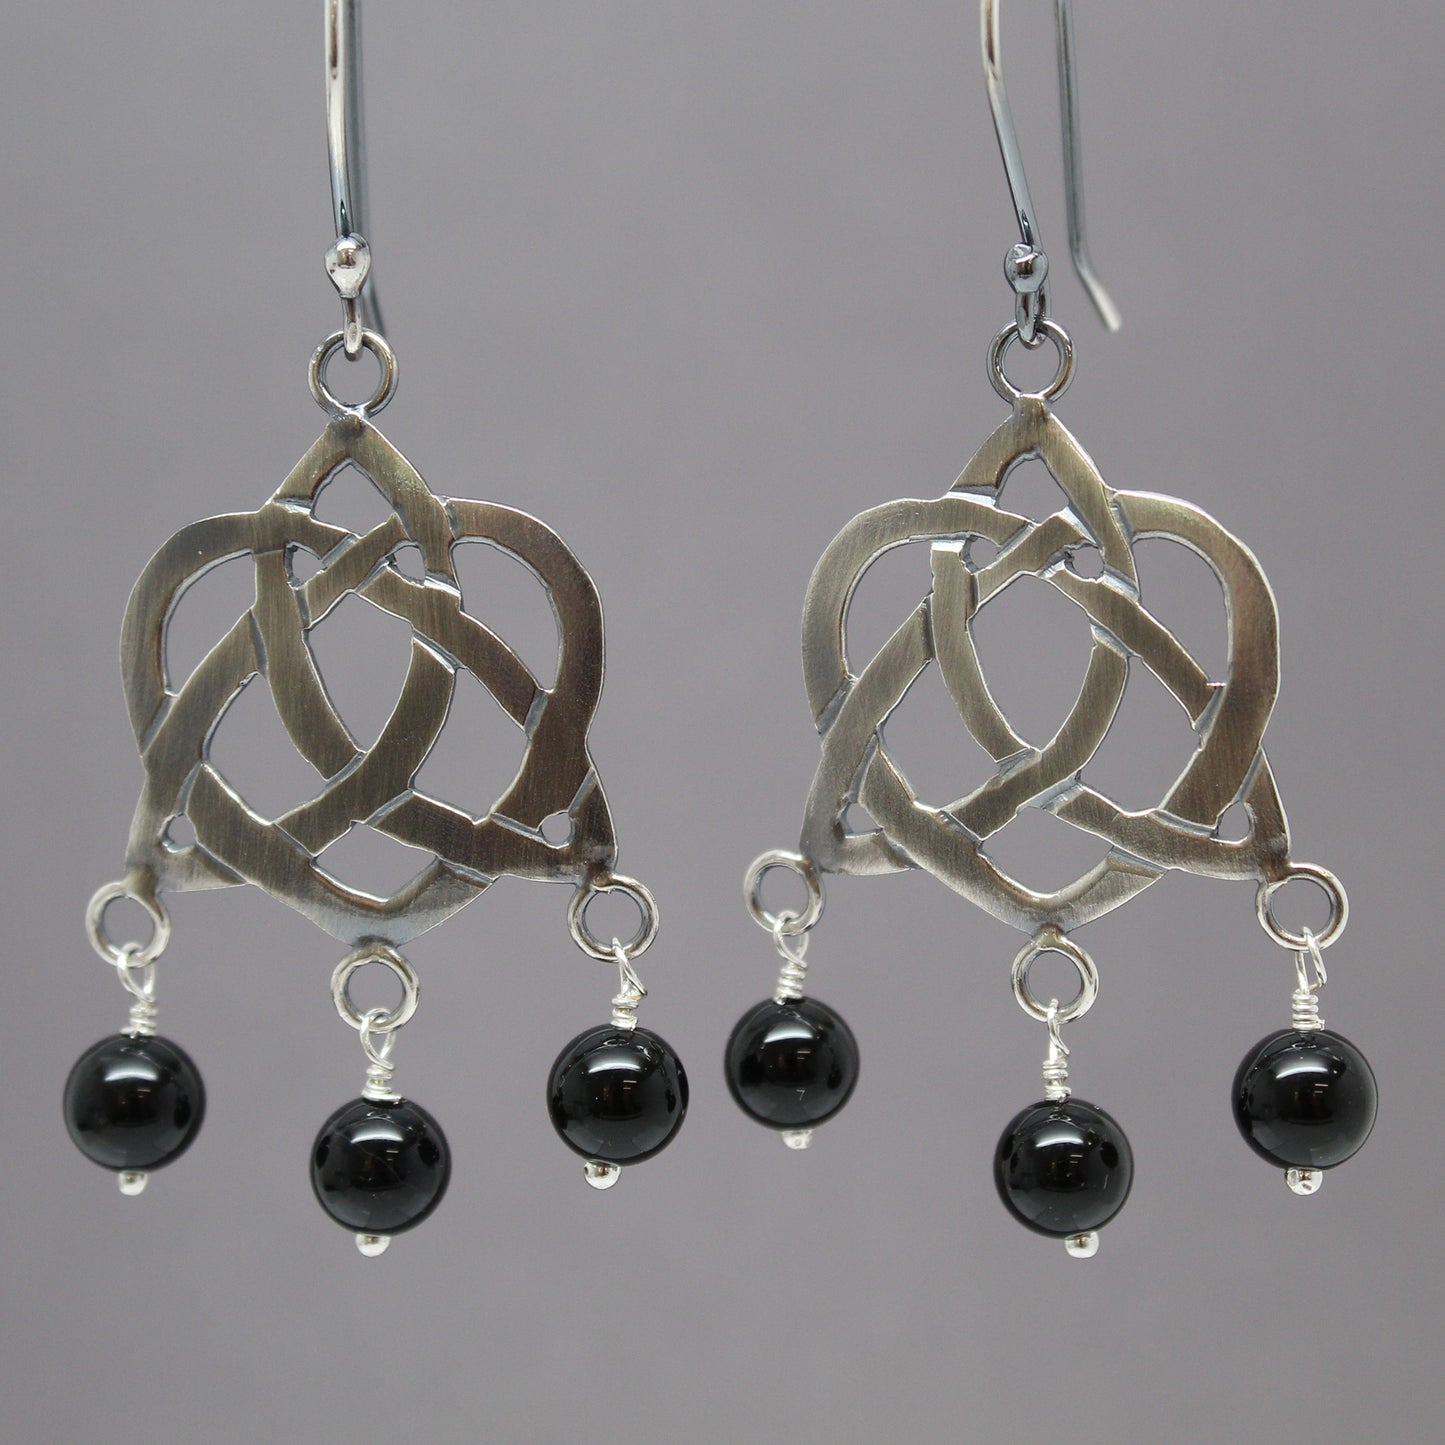 Celtic Heart Knot Earrings in Sterling Silver with Black Onyx Dangles